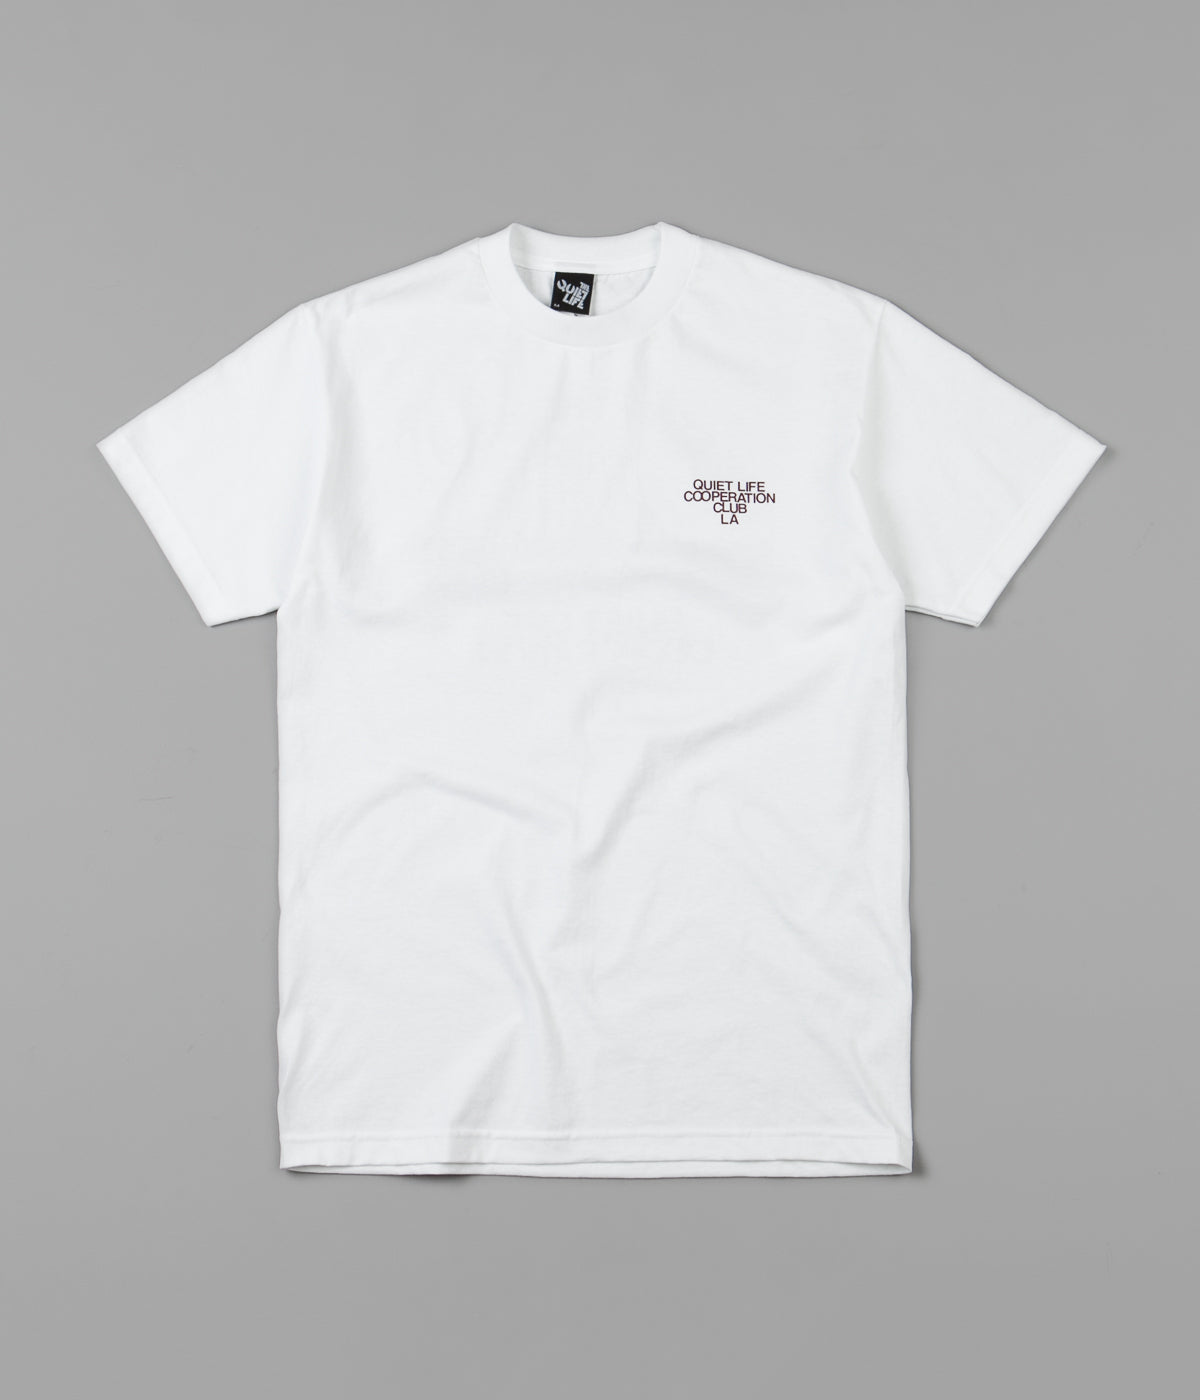 The Quiet Life Cooperation Club T-Shirt - White | Flatspot